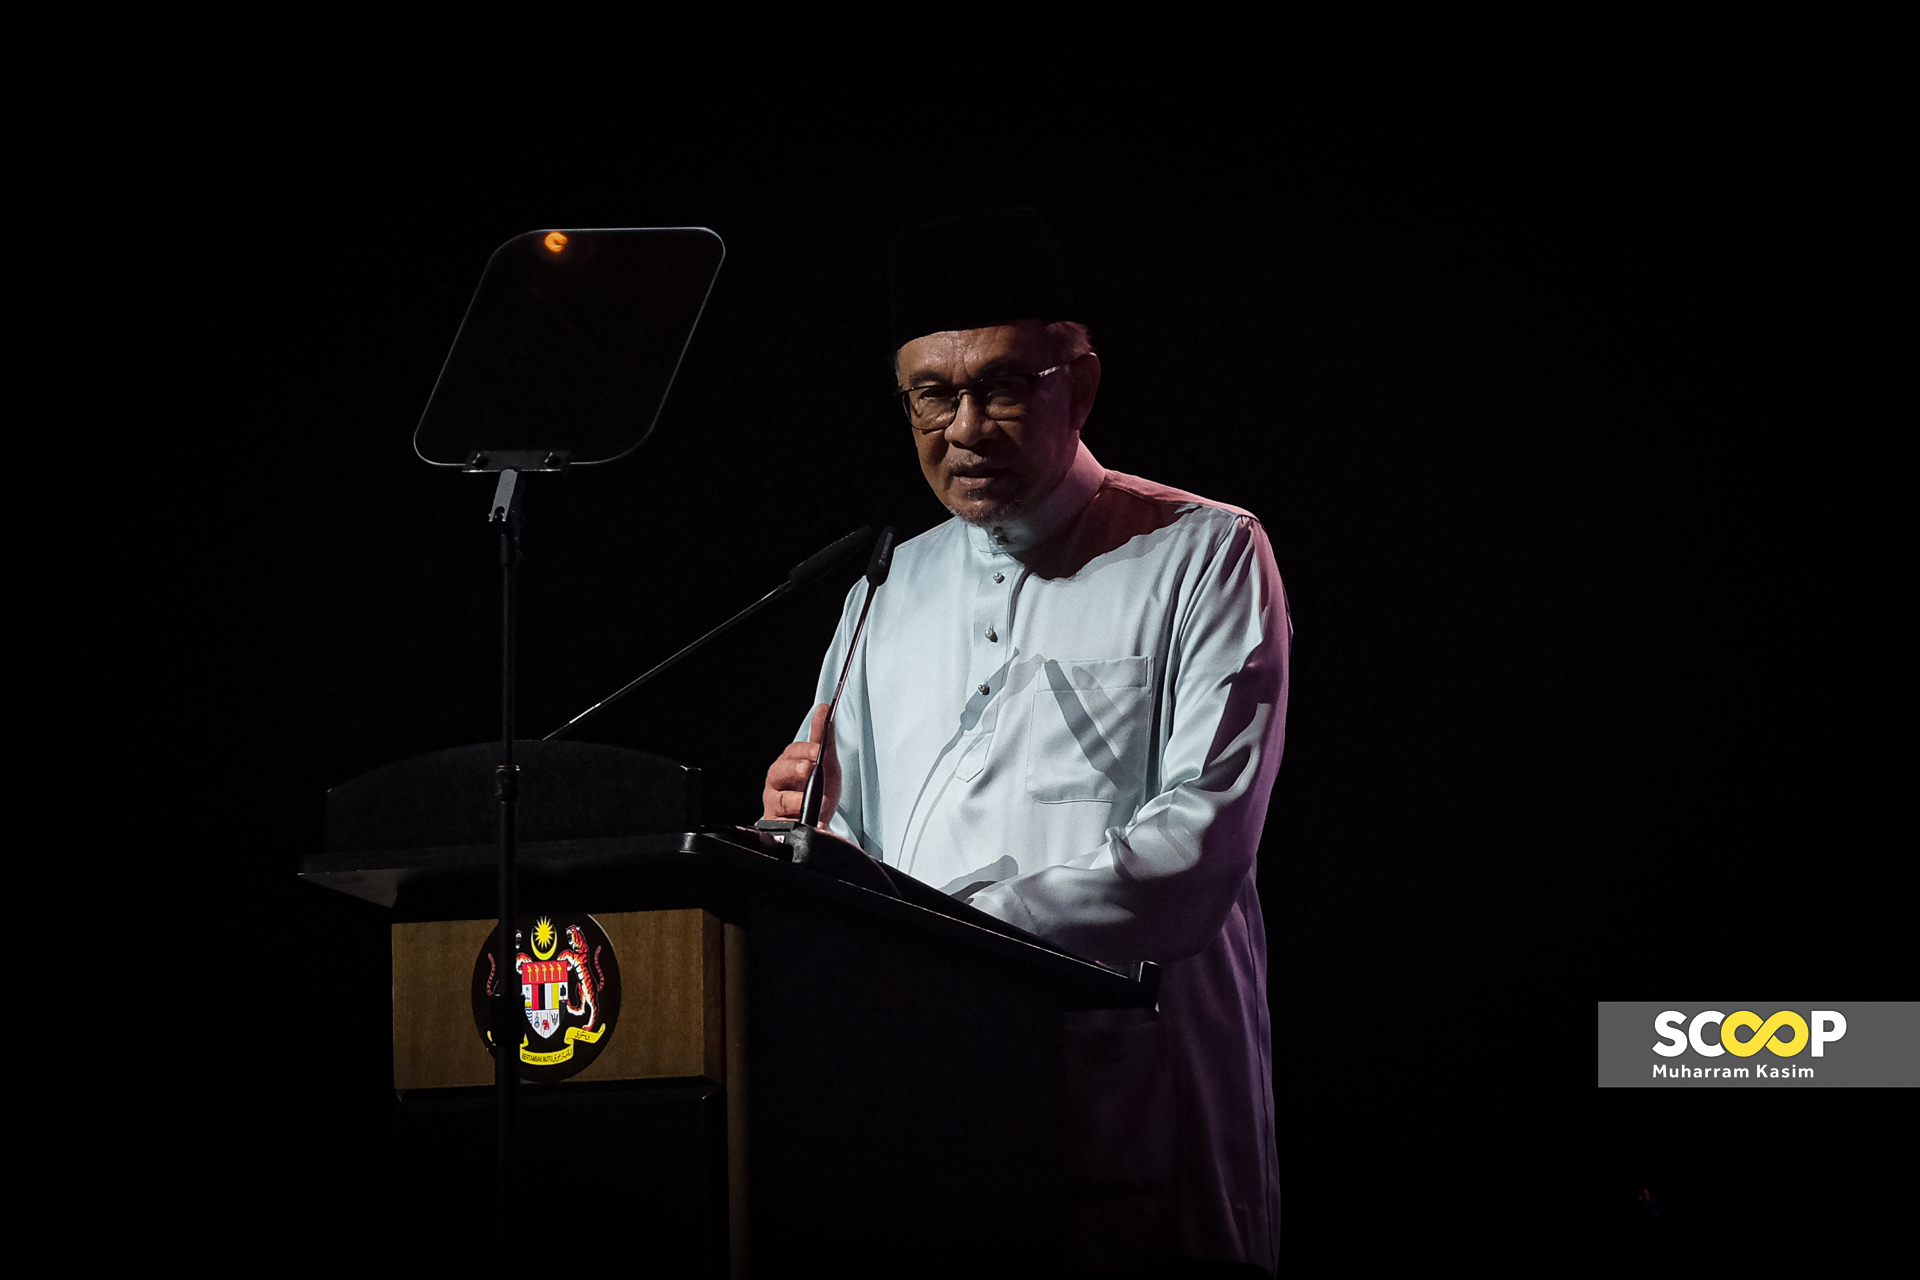 RSF downgrade fine, priority is combating racism, bigotry: Anwar on press freedom index drop